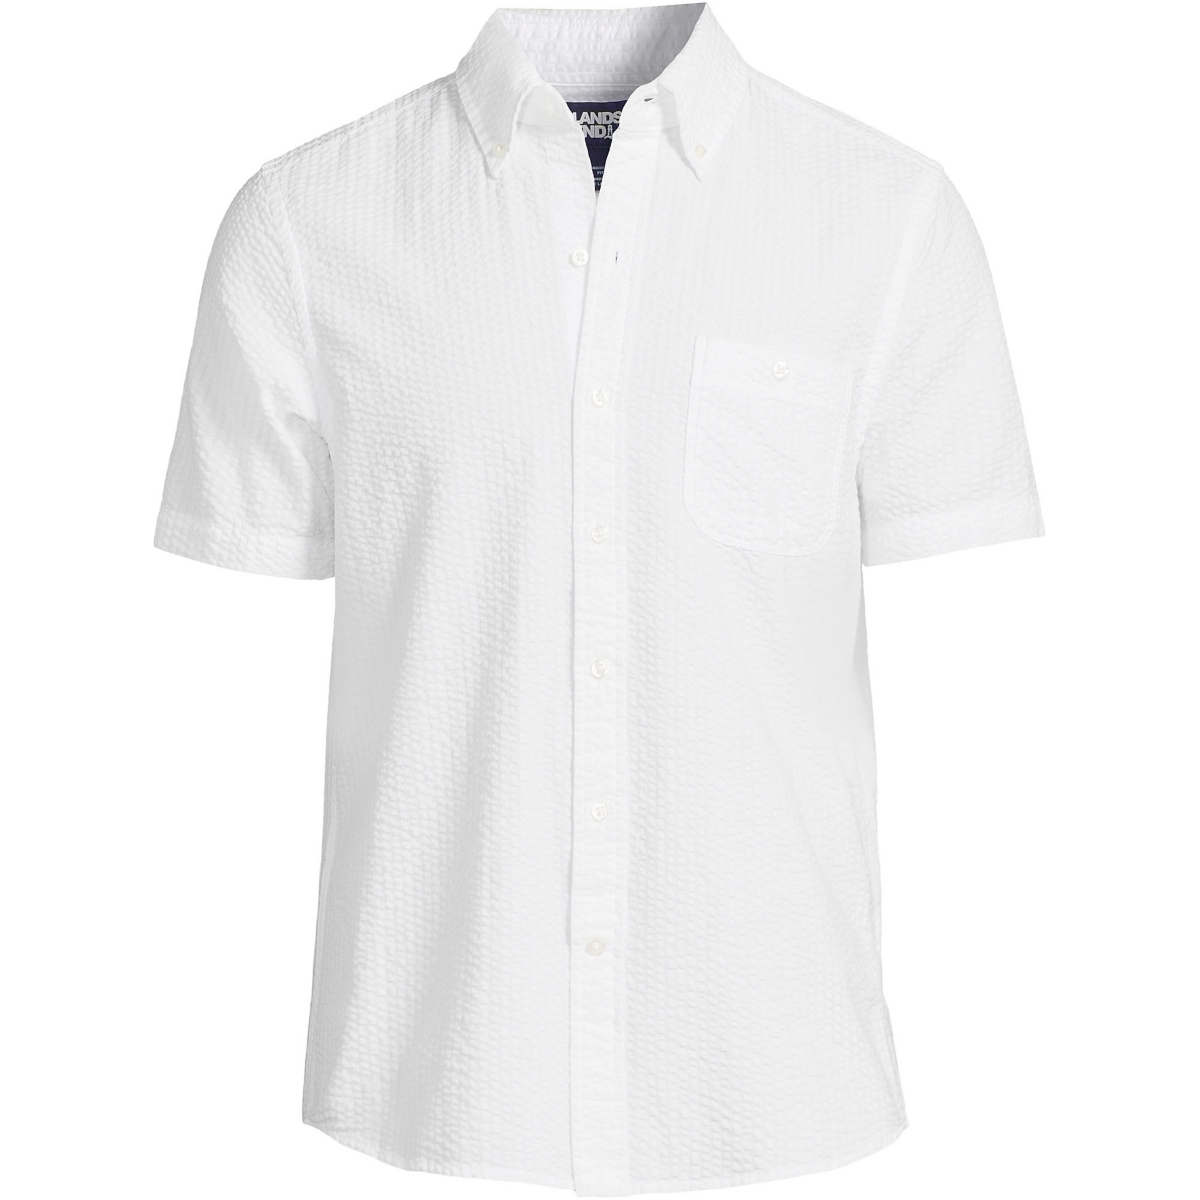 Men's Traditional Fit Short Sleeve Seersucker Shirt - Royal cobalt pin stripe